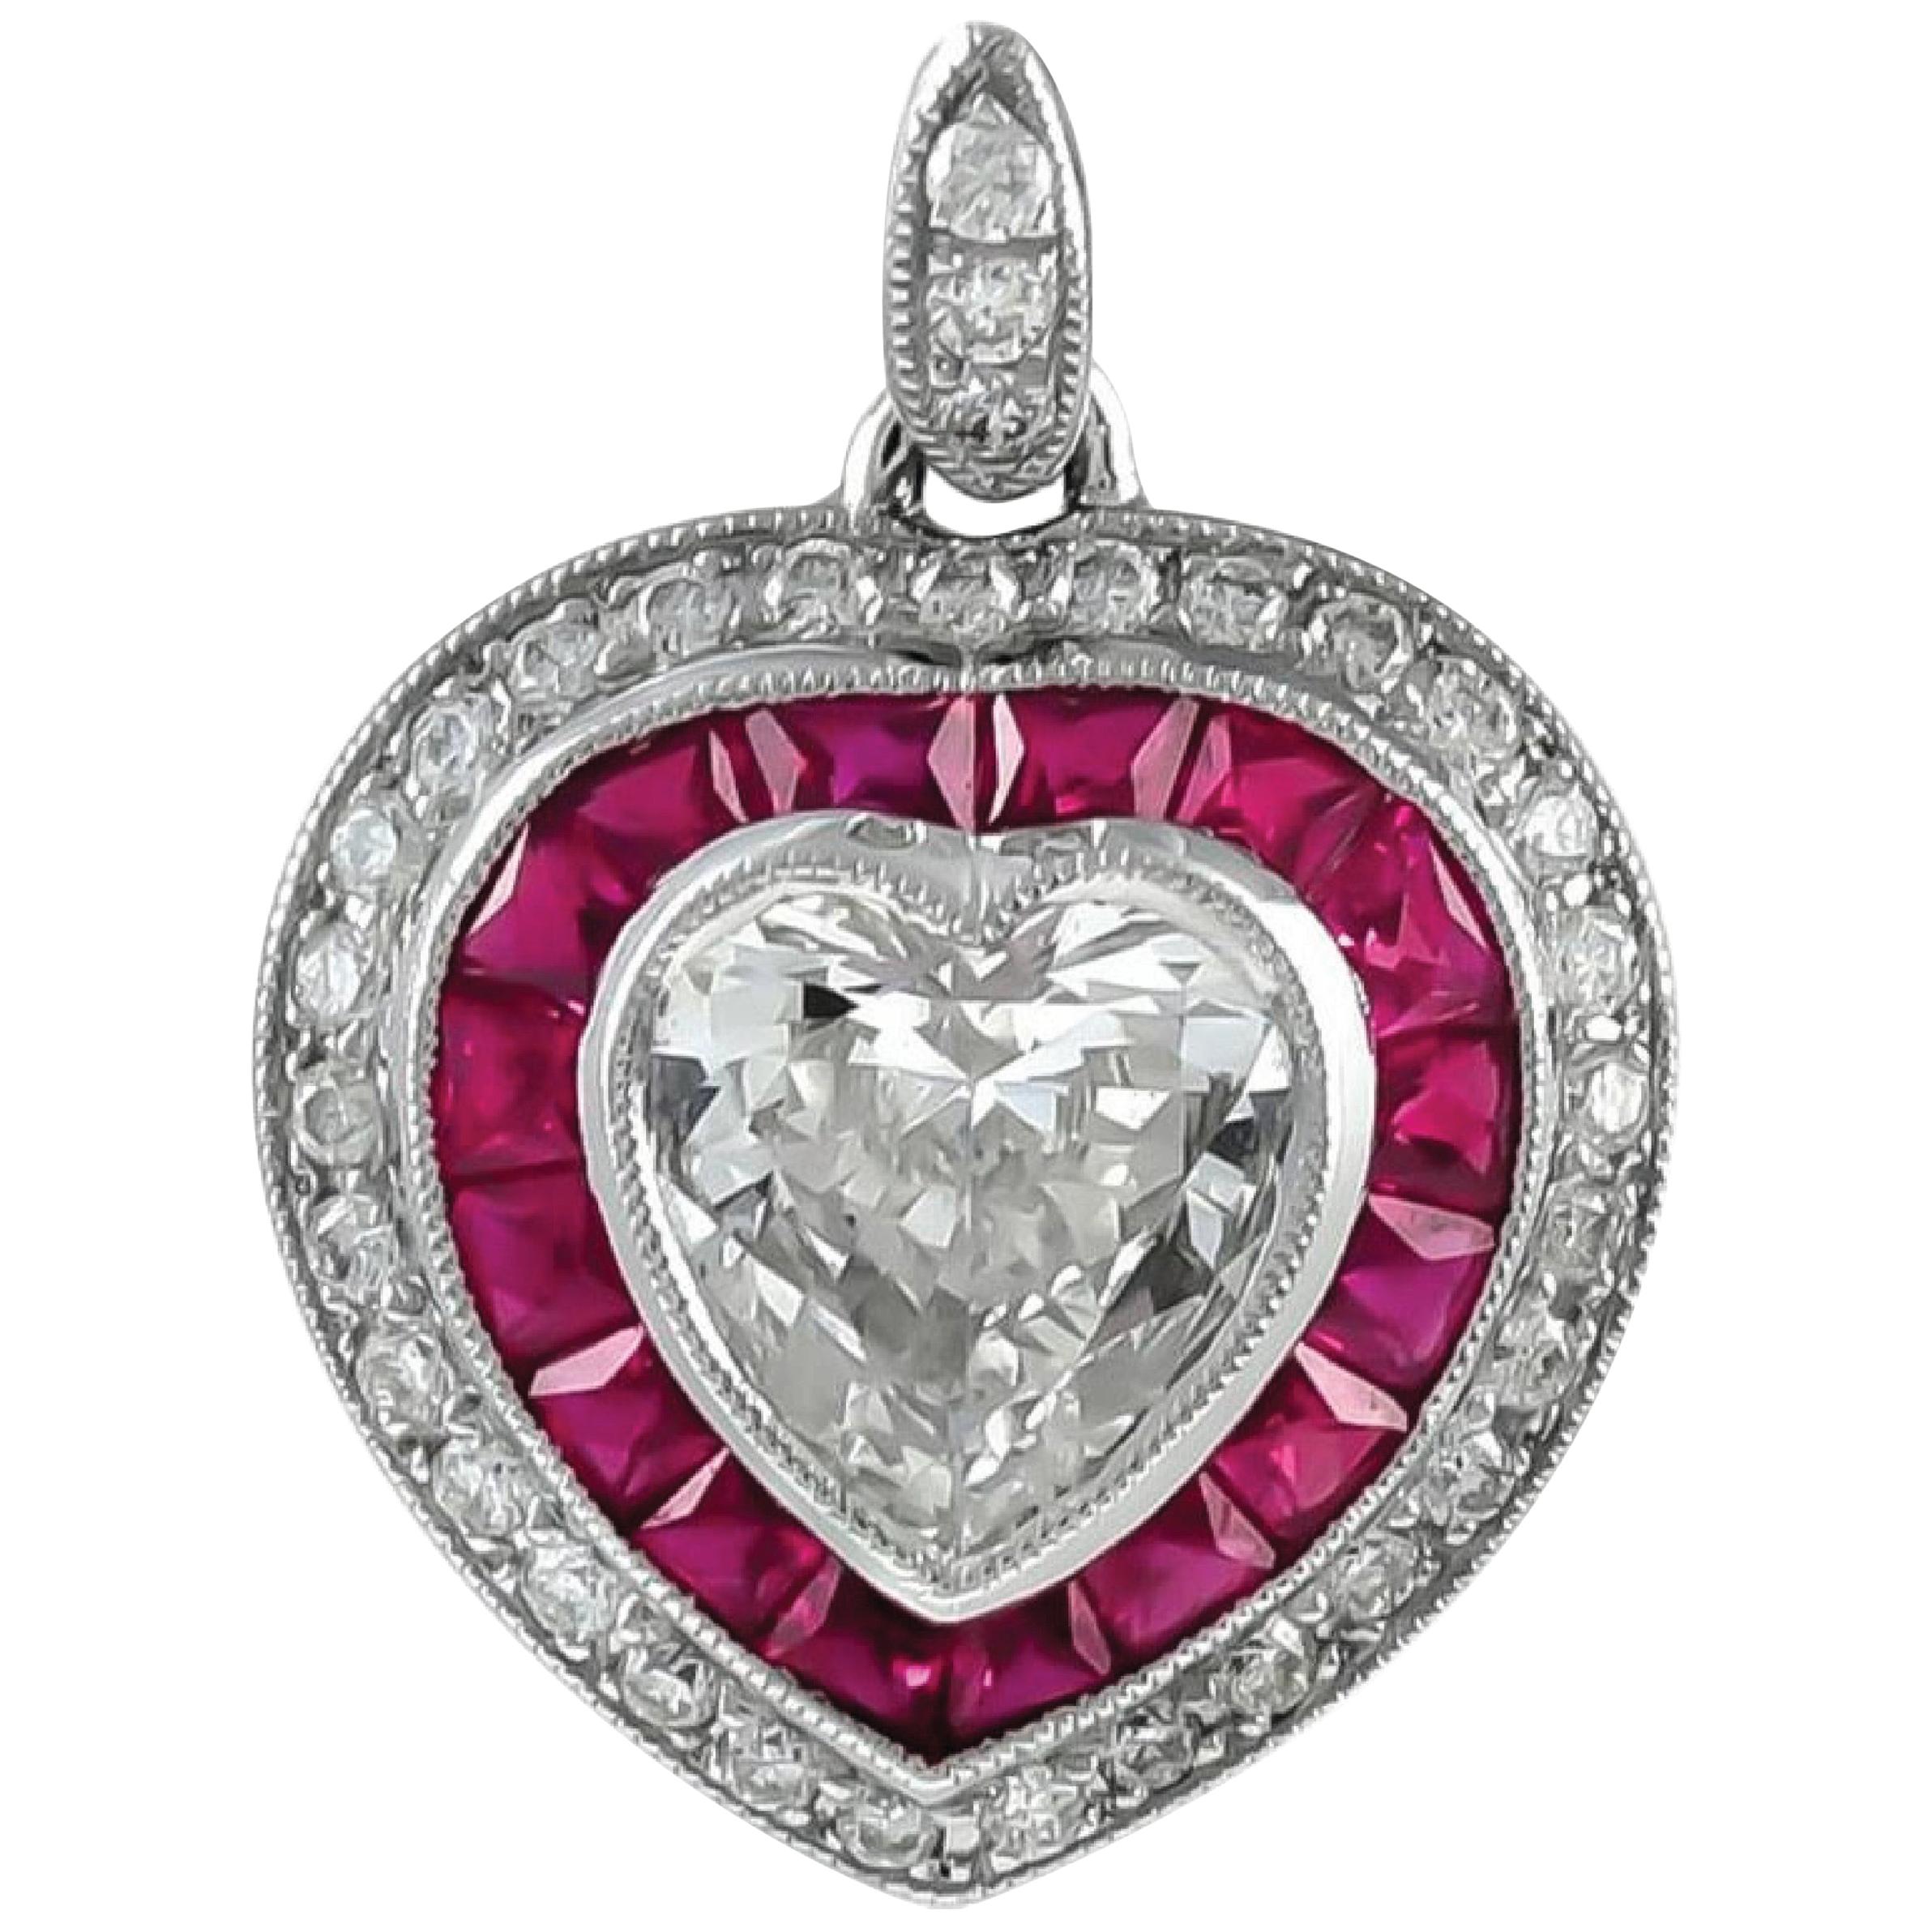 Beautiful Heart Shaped Platinum Pendant with Rubies and Diamonds